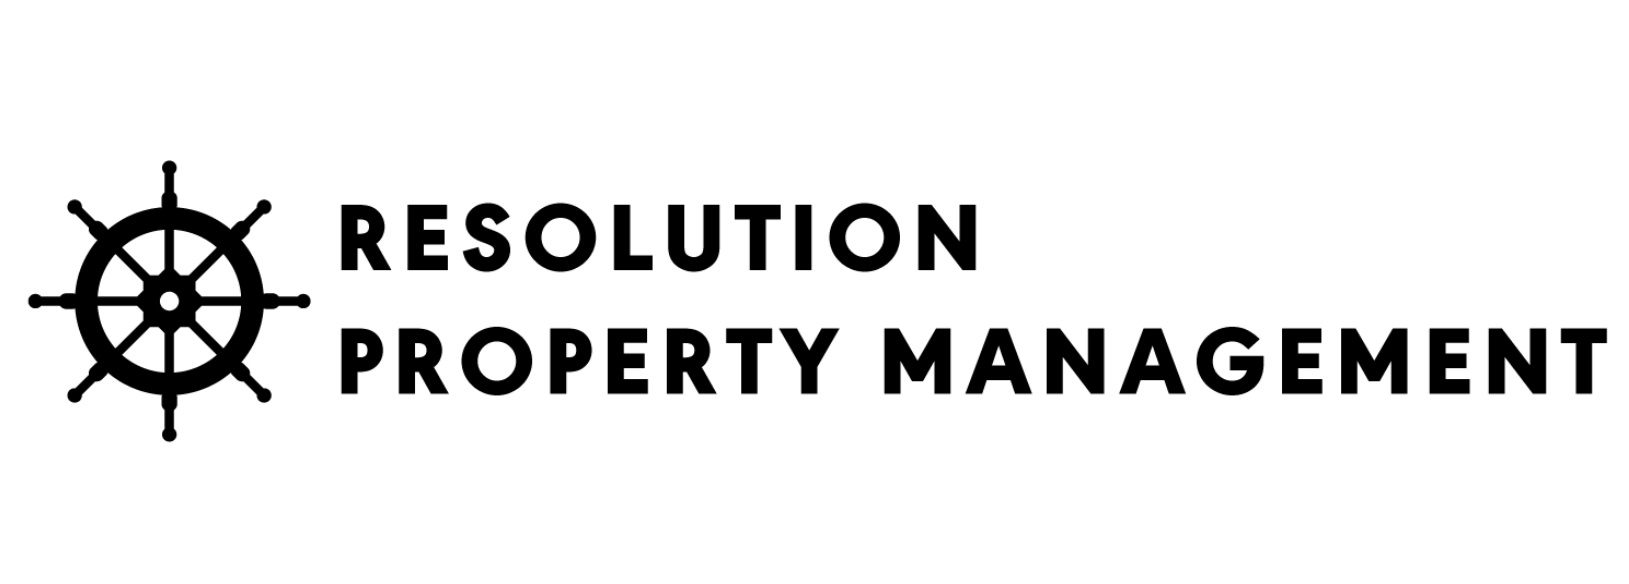 Resolution Property Management logo